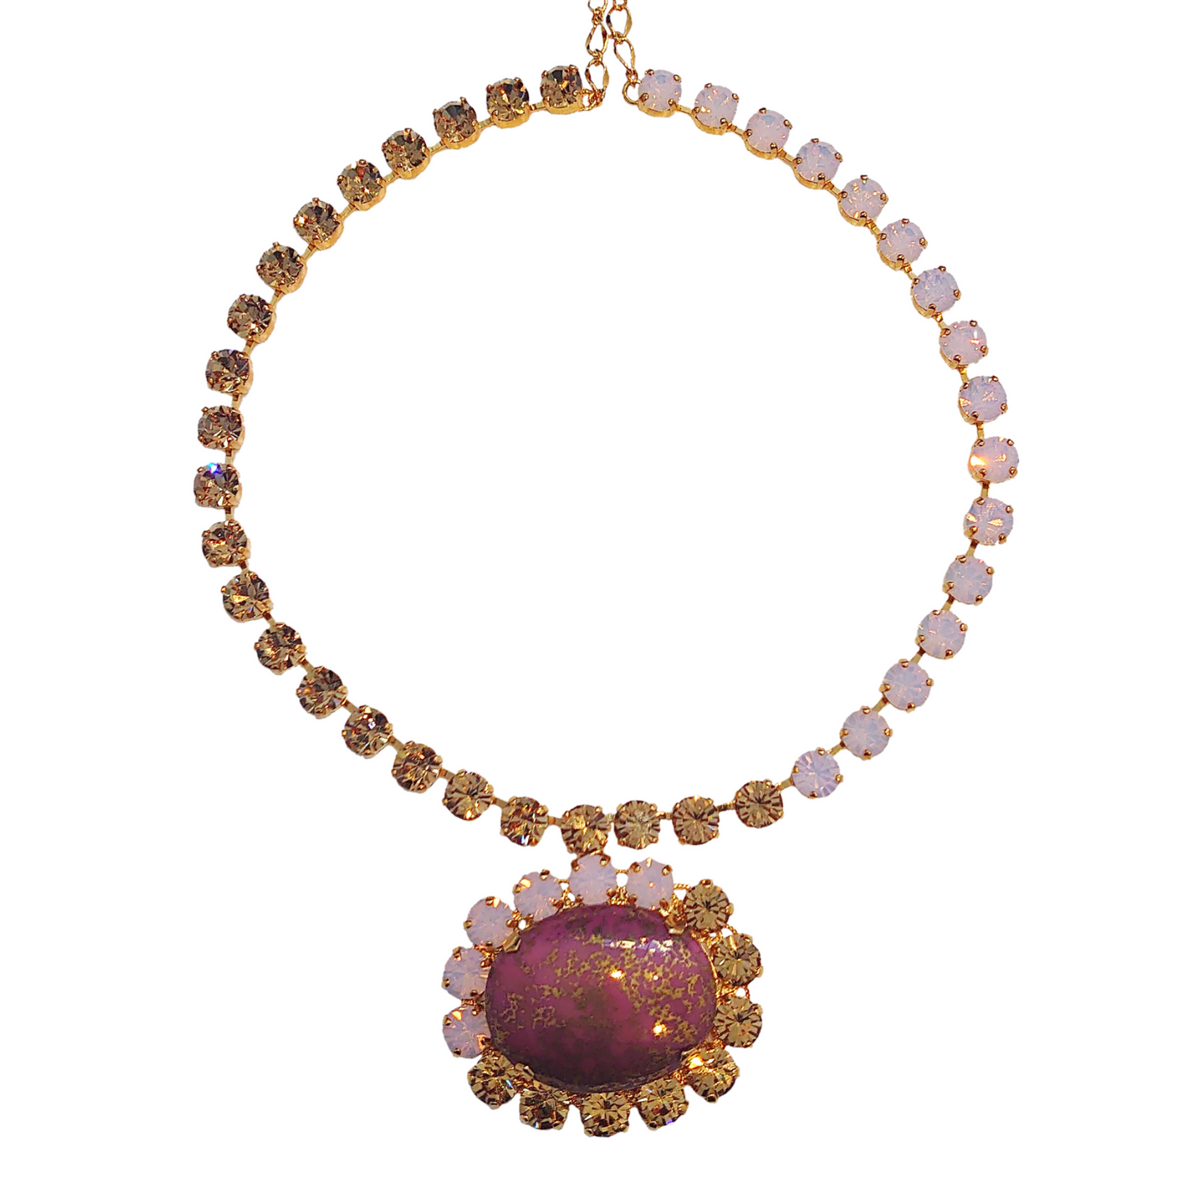 Bespoke Swarovski Crystals Necklace with Vintage Precious Stone - Rose